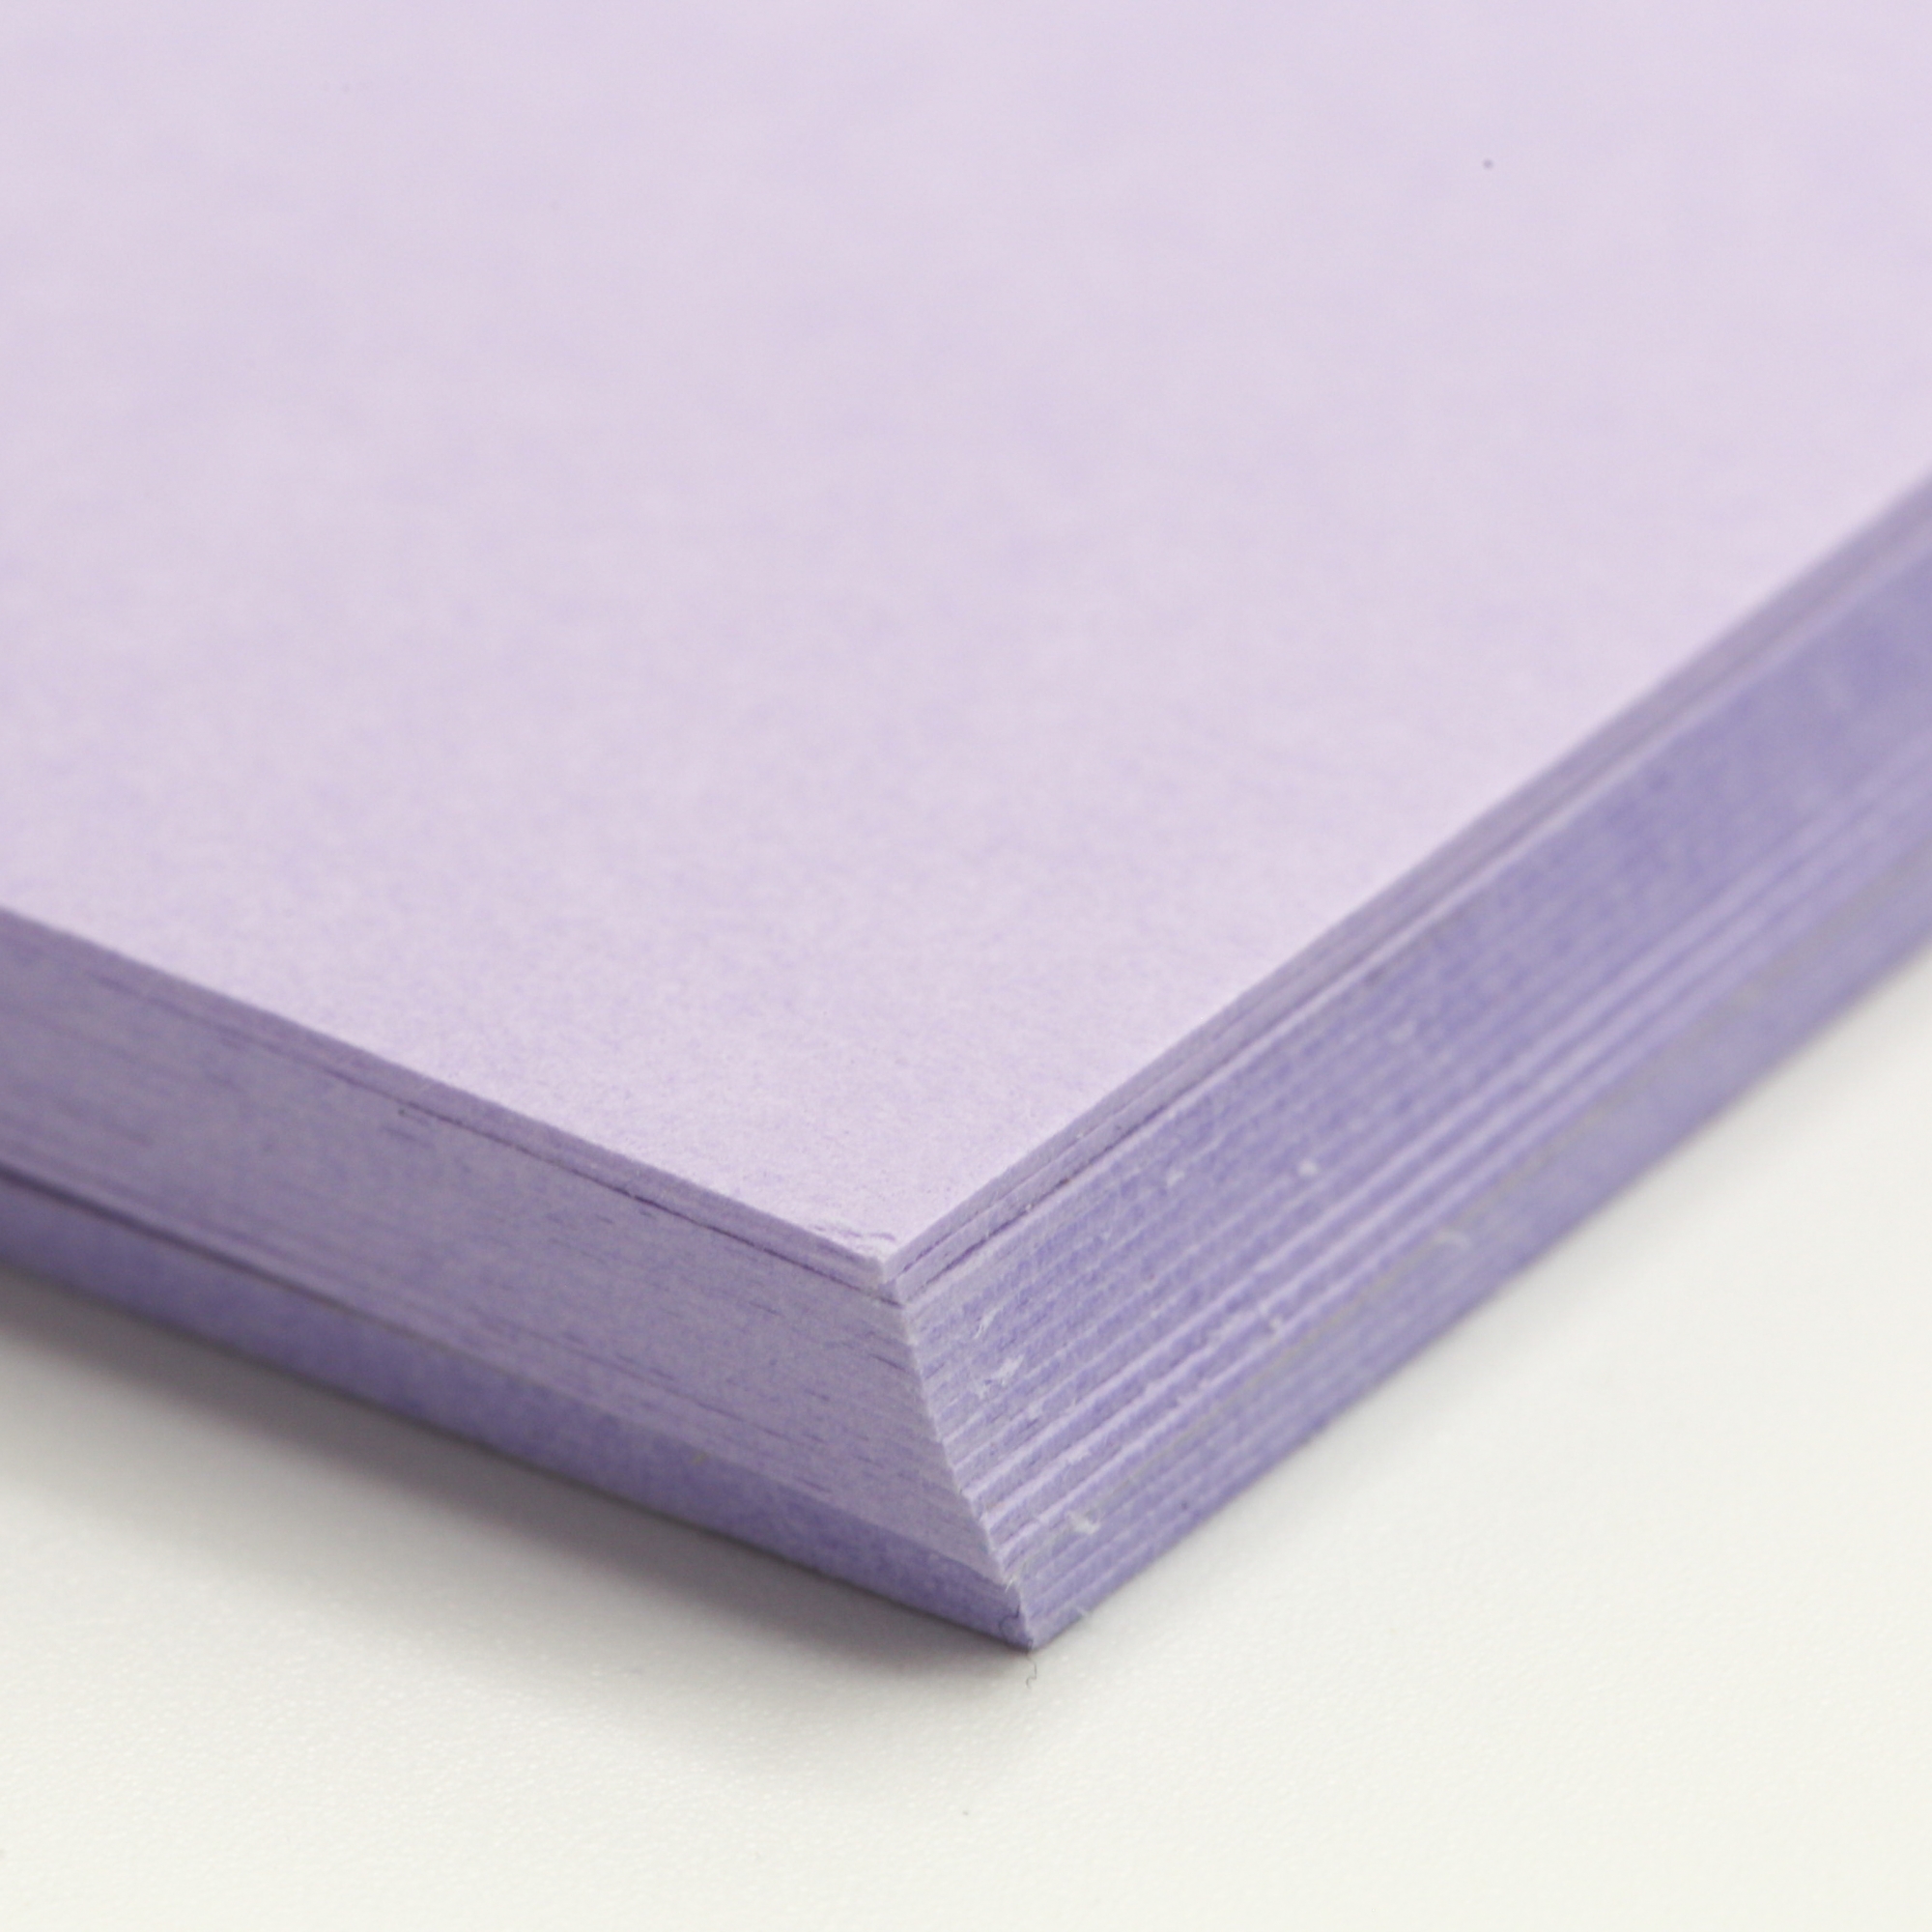 Colorplan Purple 8.5x11 130lb cover 48pk